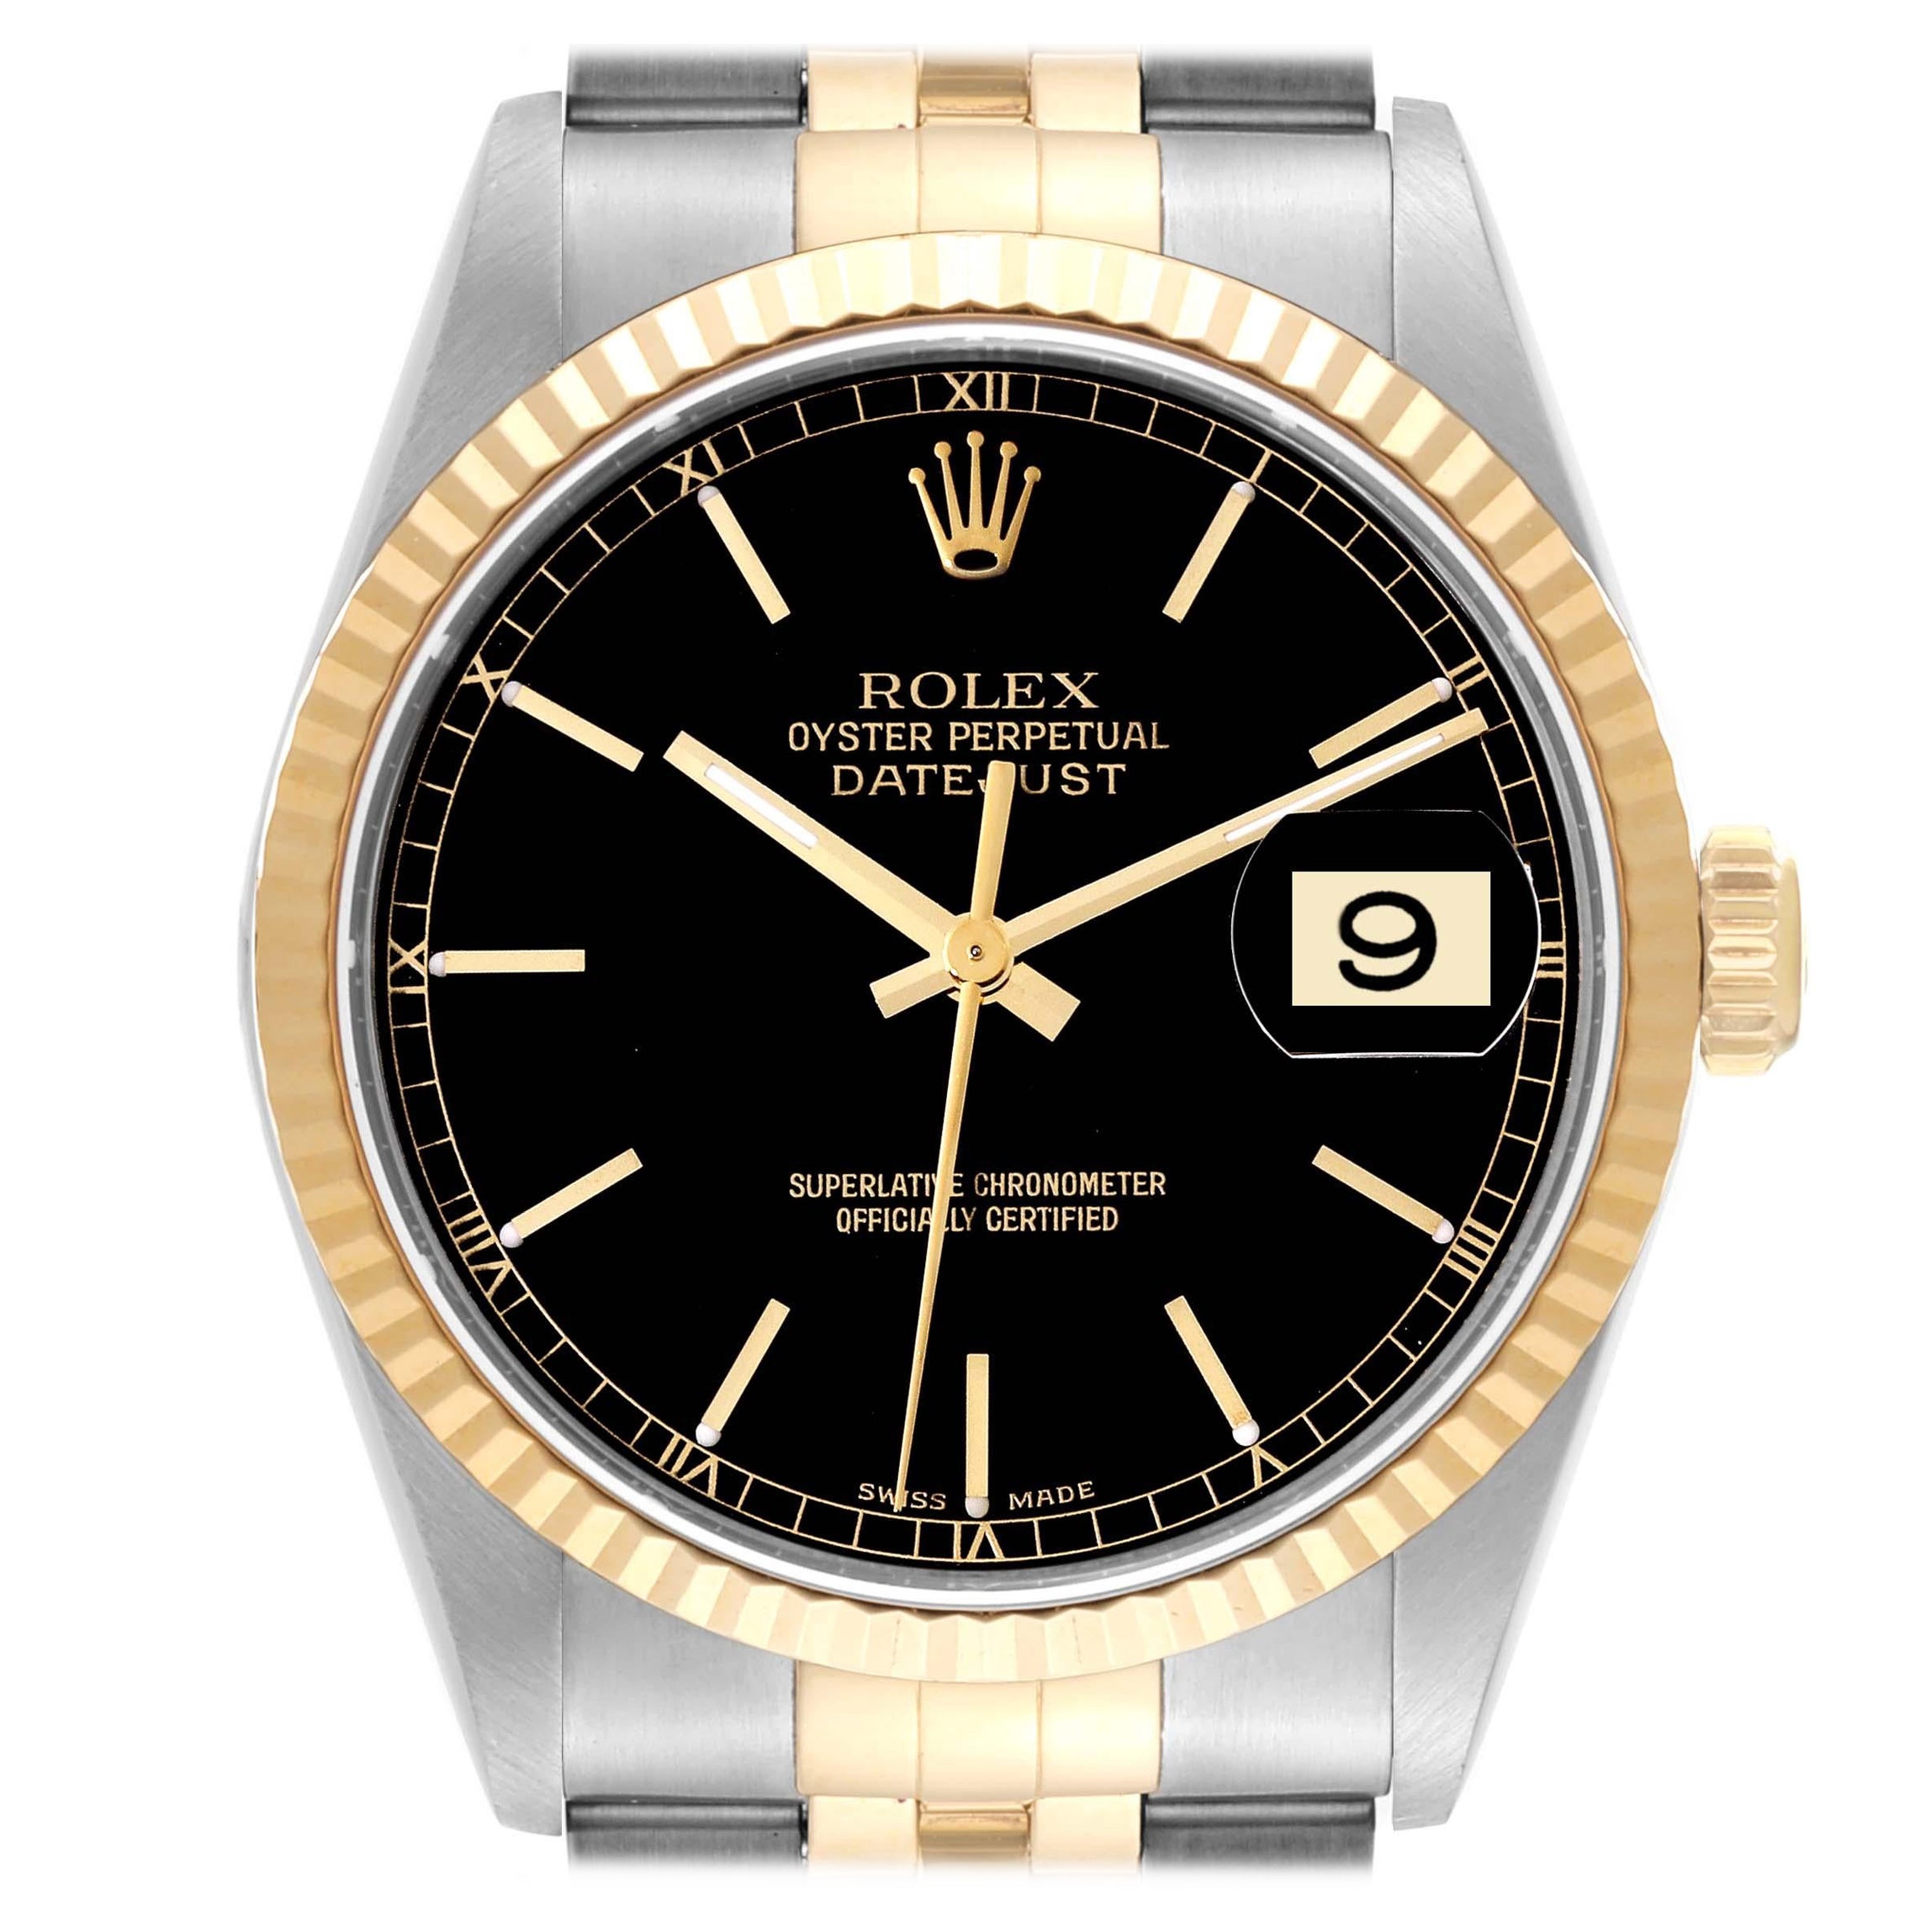 Rolex Datejust 36 Steel Yellow Gold Black Dial Mens Watch 16233